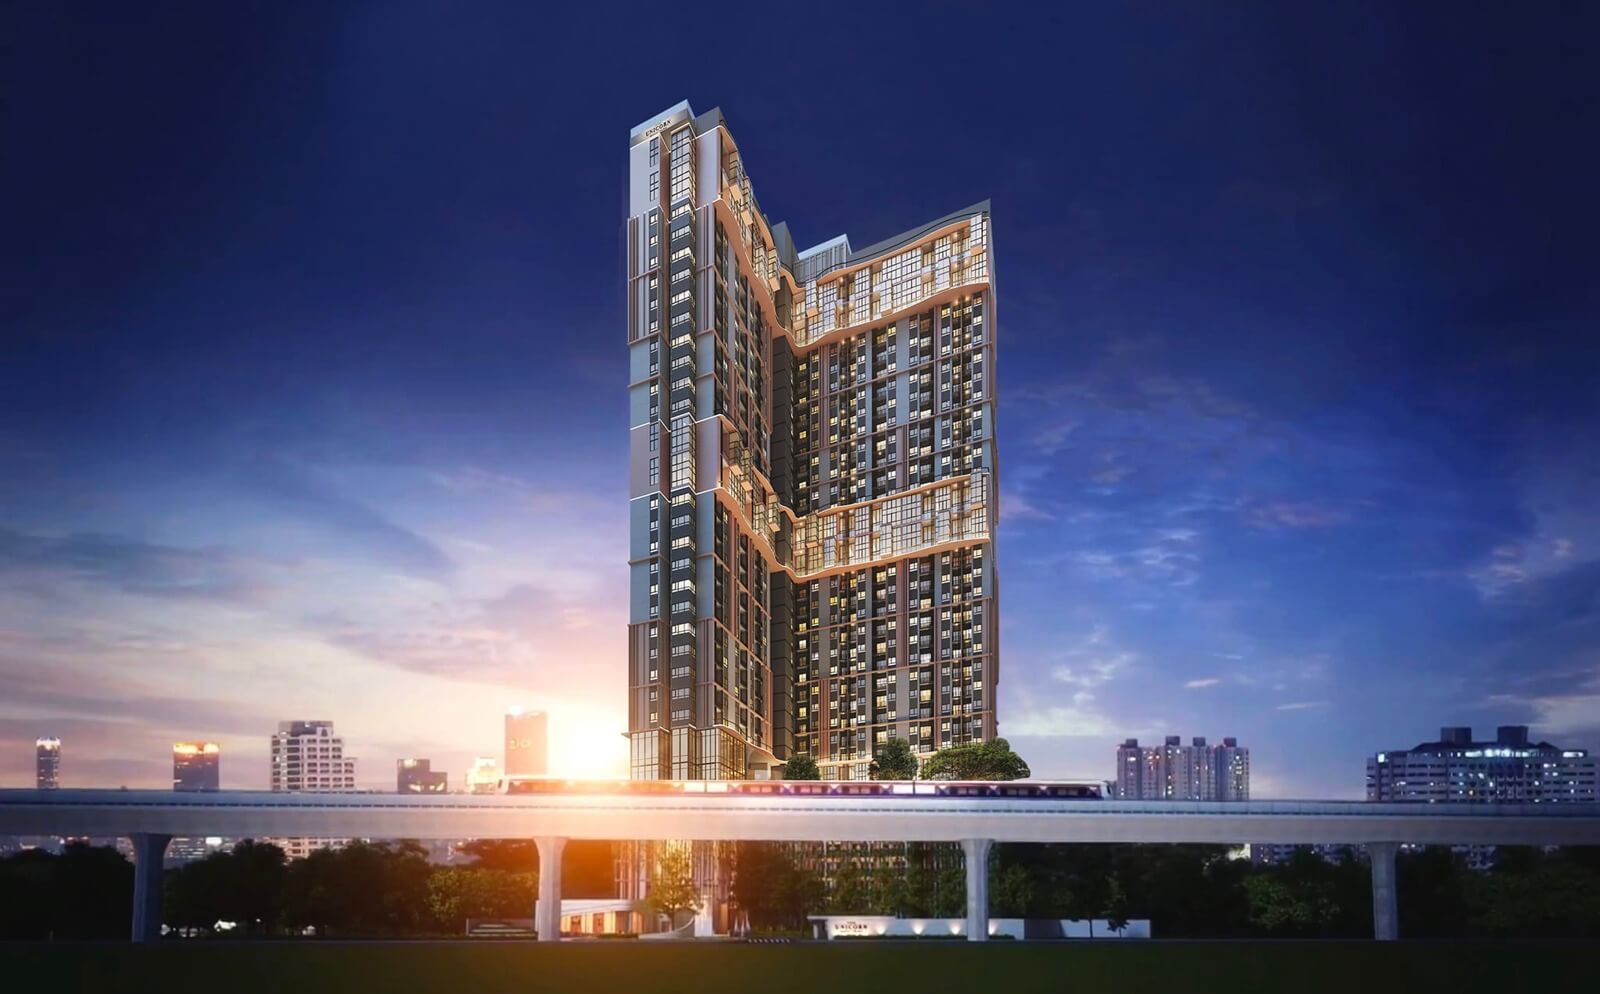 Bangkok Property & Business Investment 